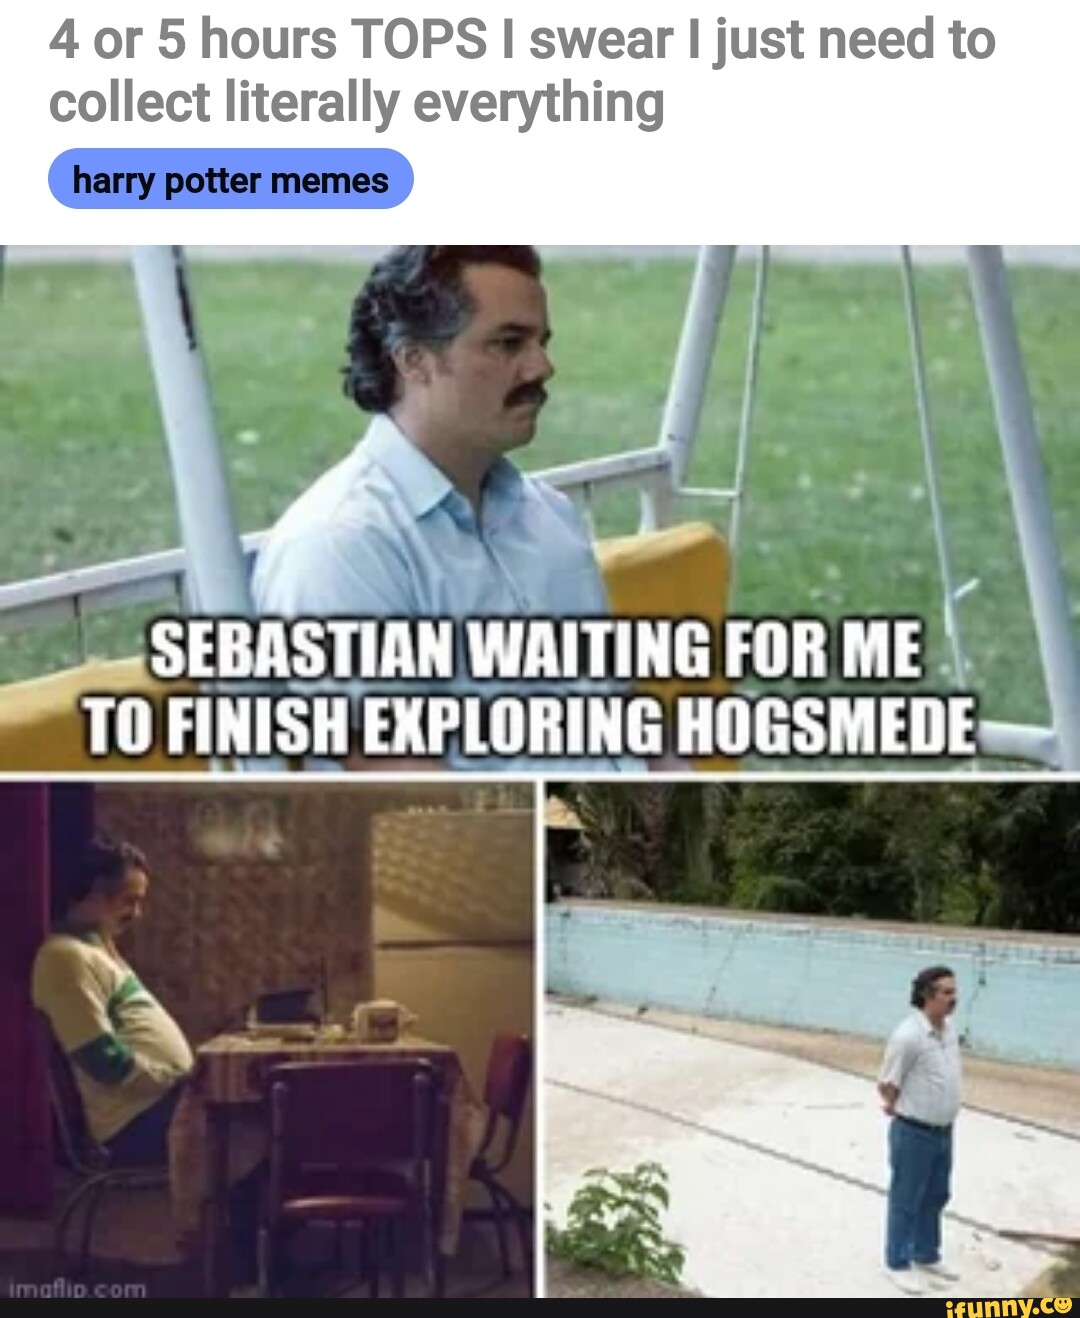 A harry potter meme by me!